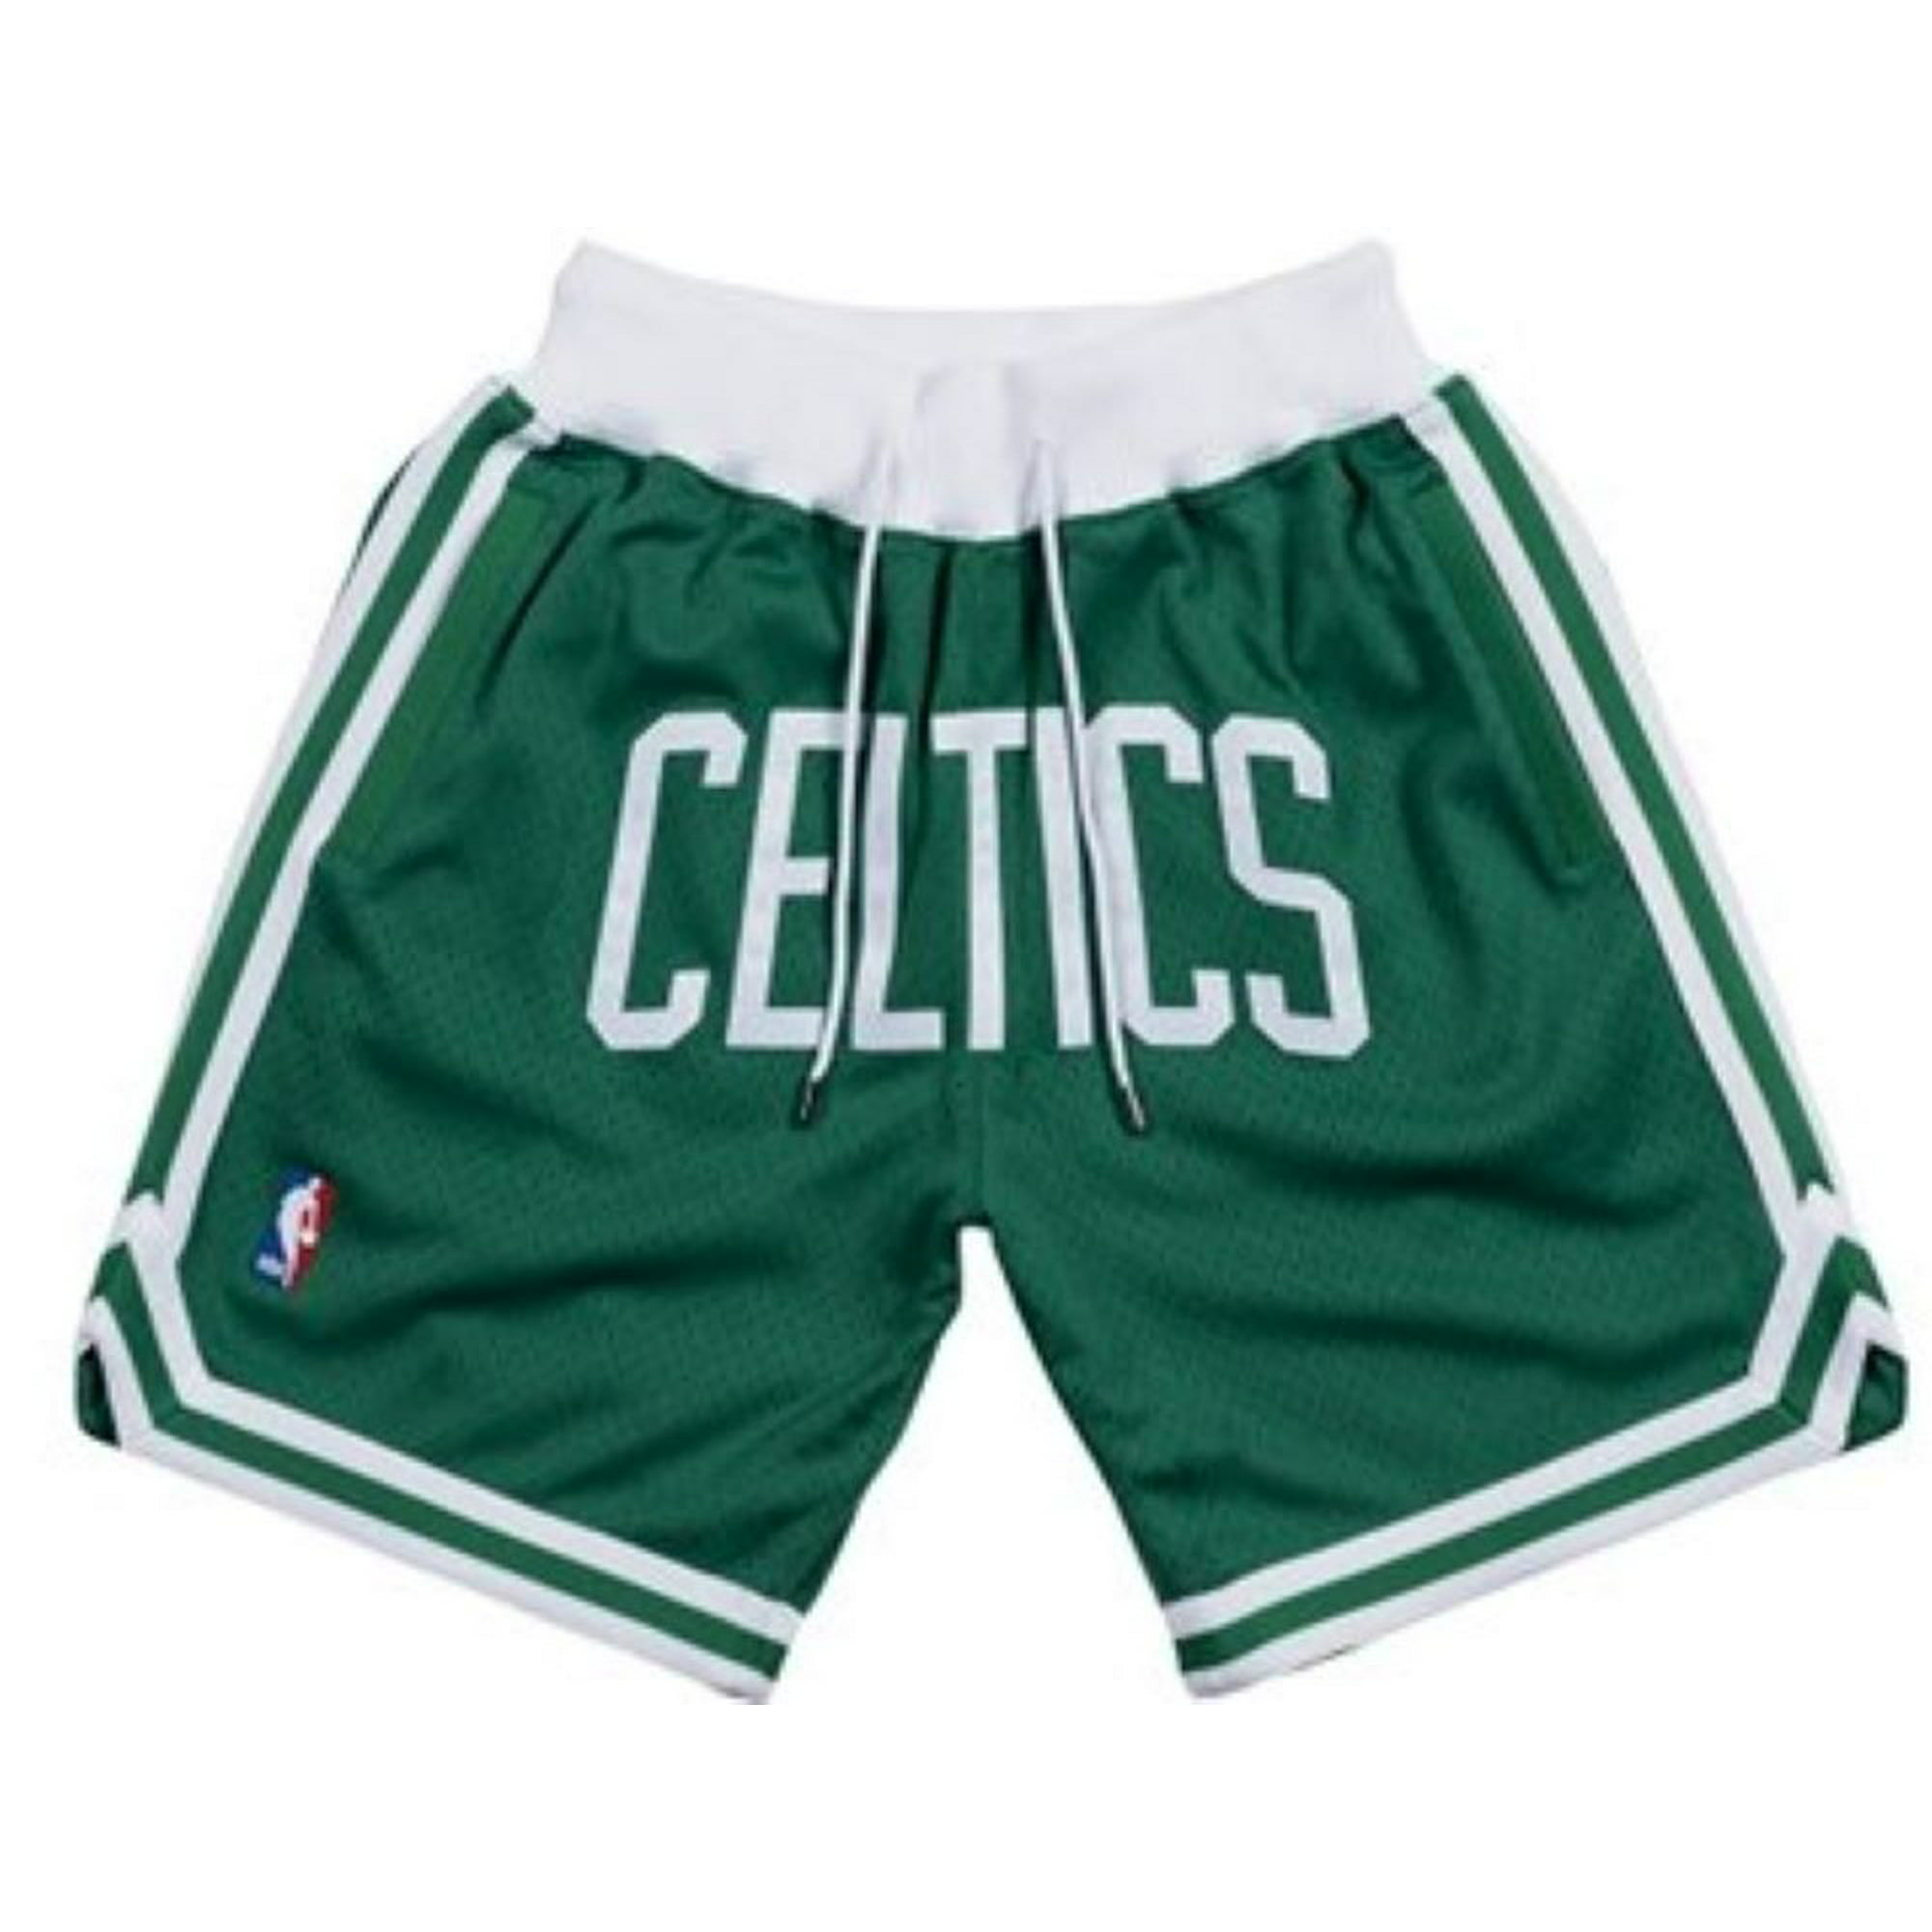 celtics shorts men